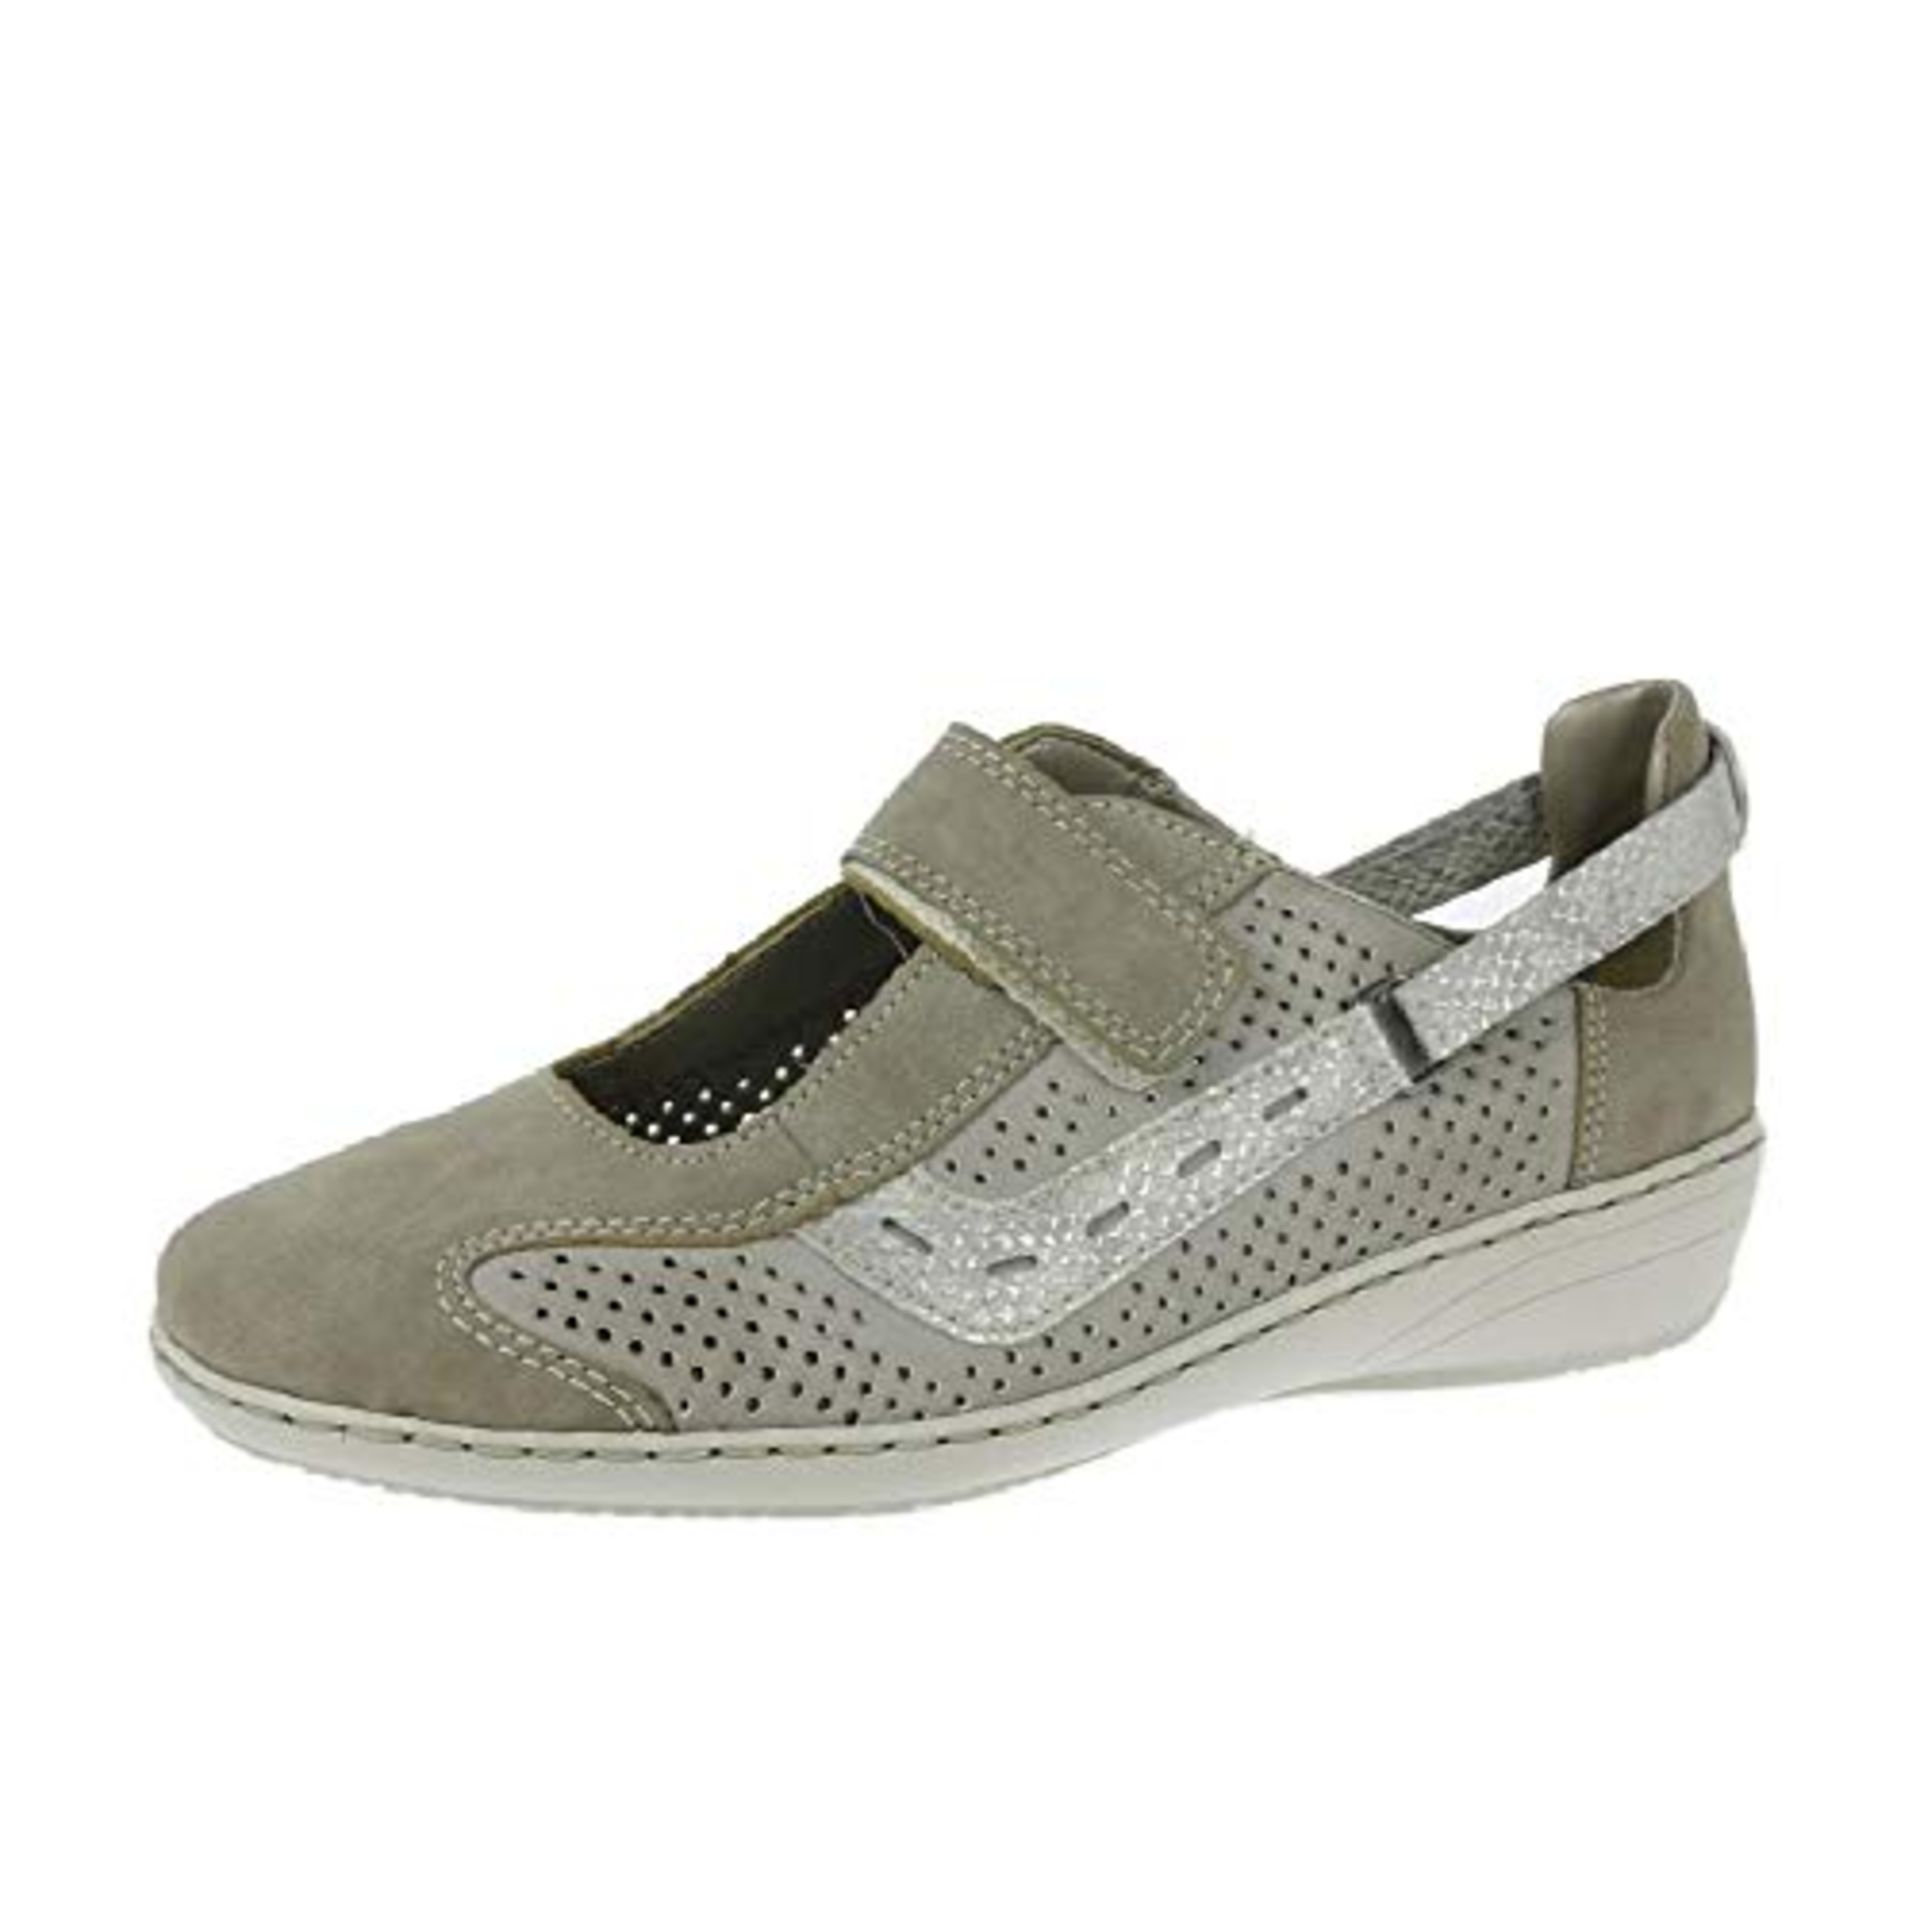 Womens Velcro Strap Shoe 43865-40 6 UK 6 UK Women’s Shoetique83346 |4020933211959